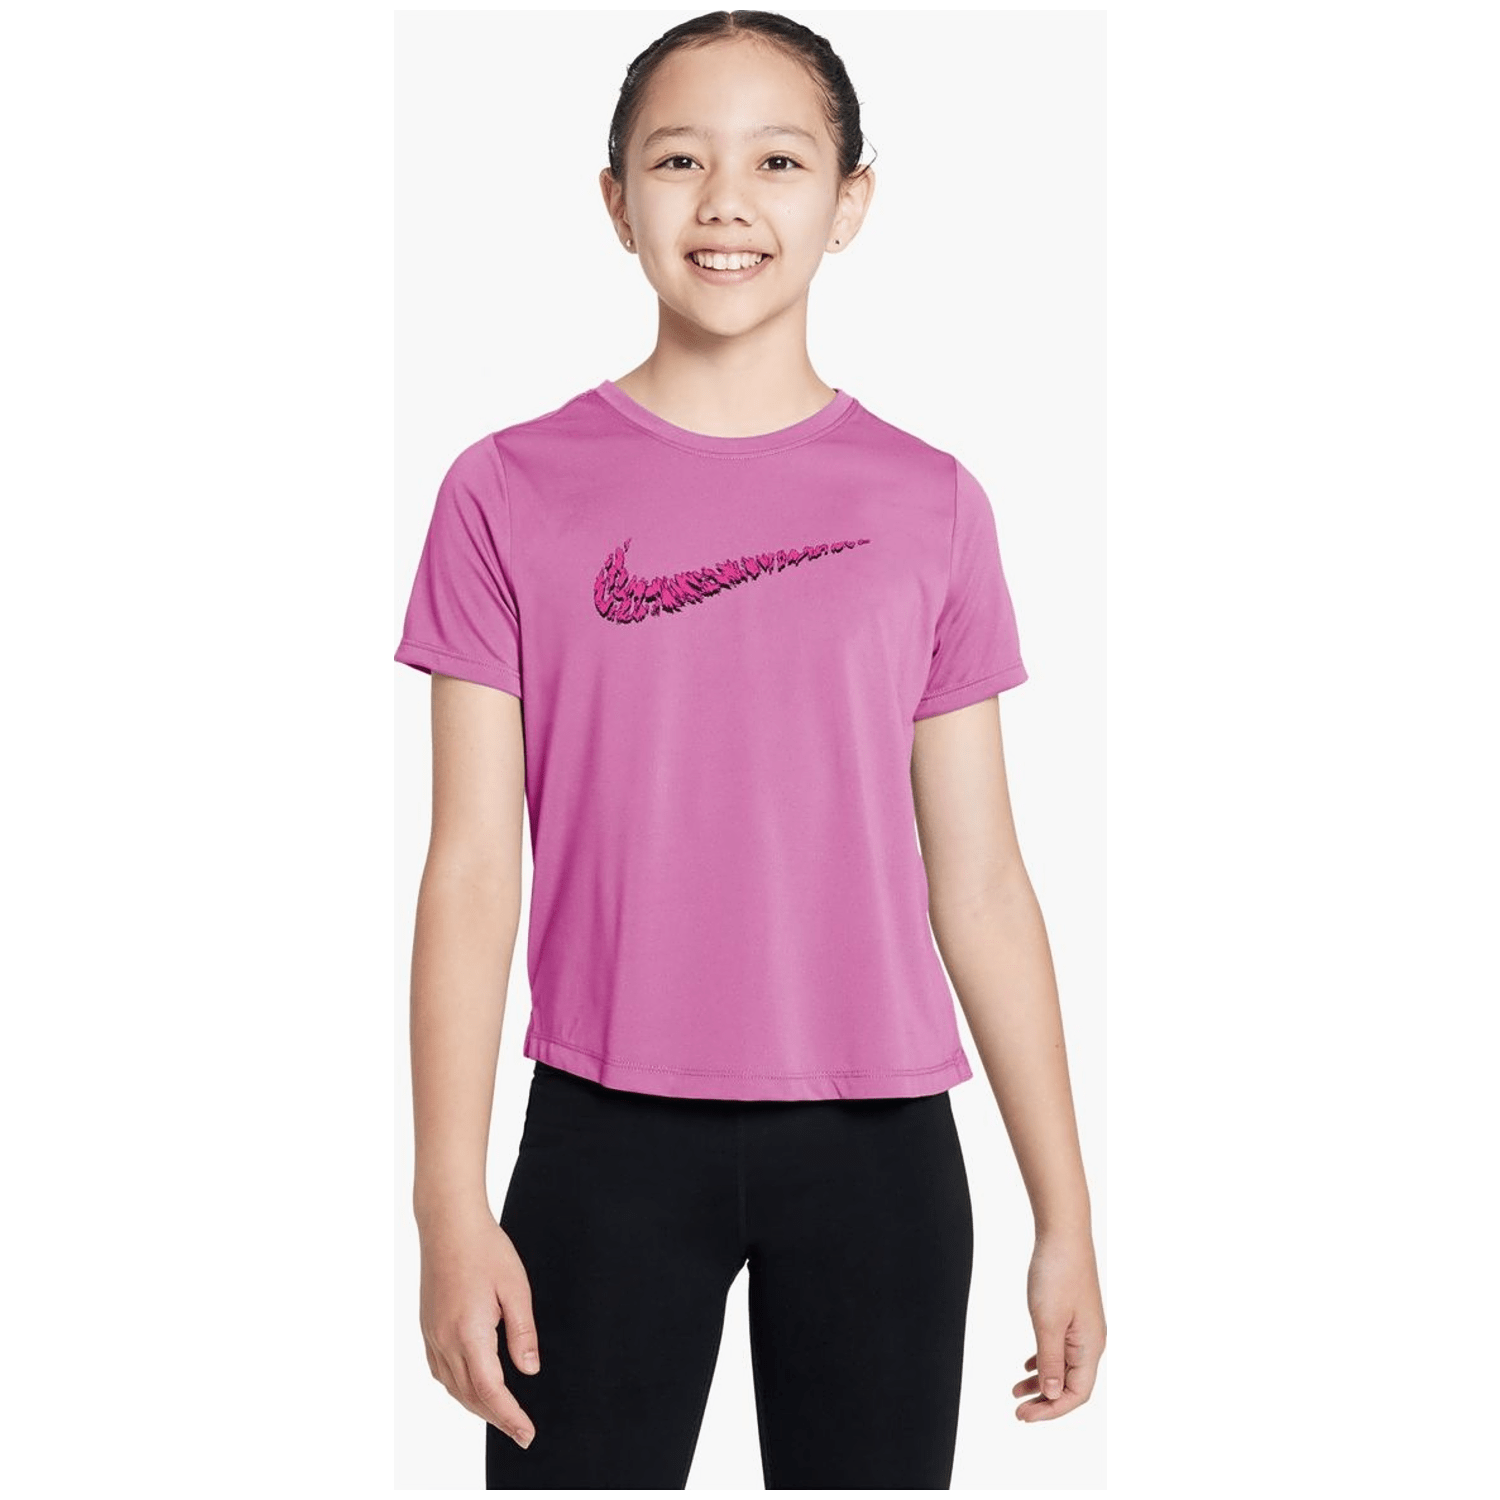 Nike One Top Mädchen T-Shirt